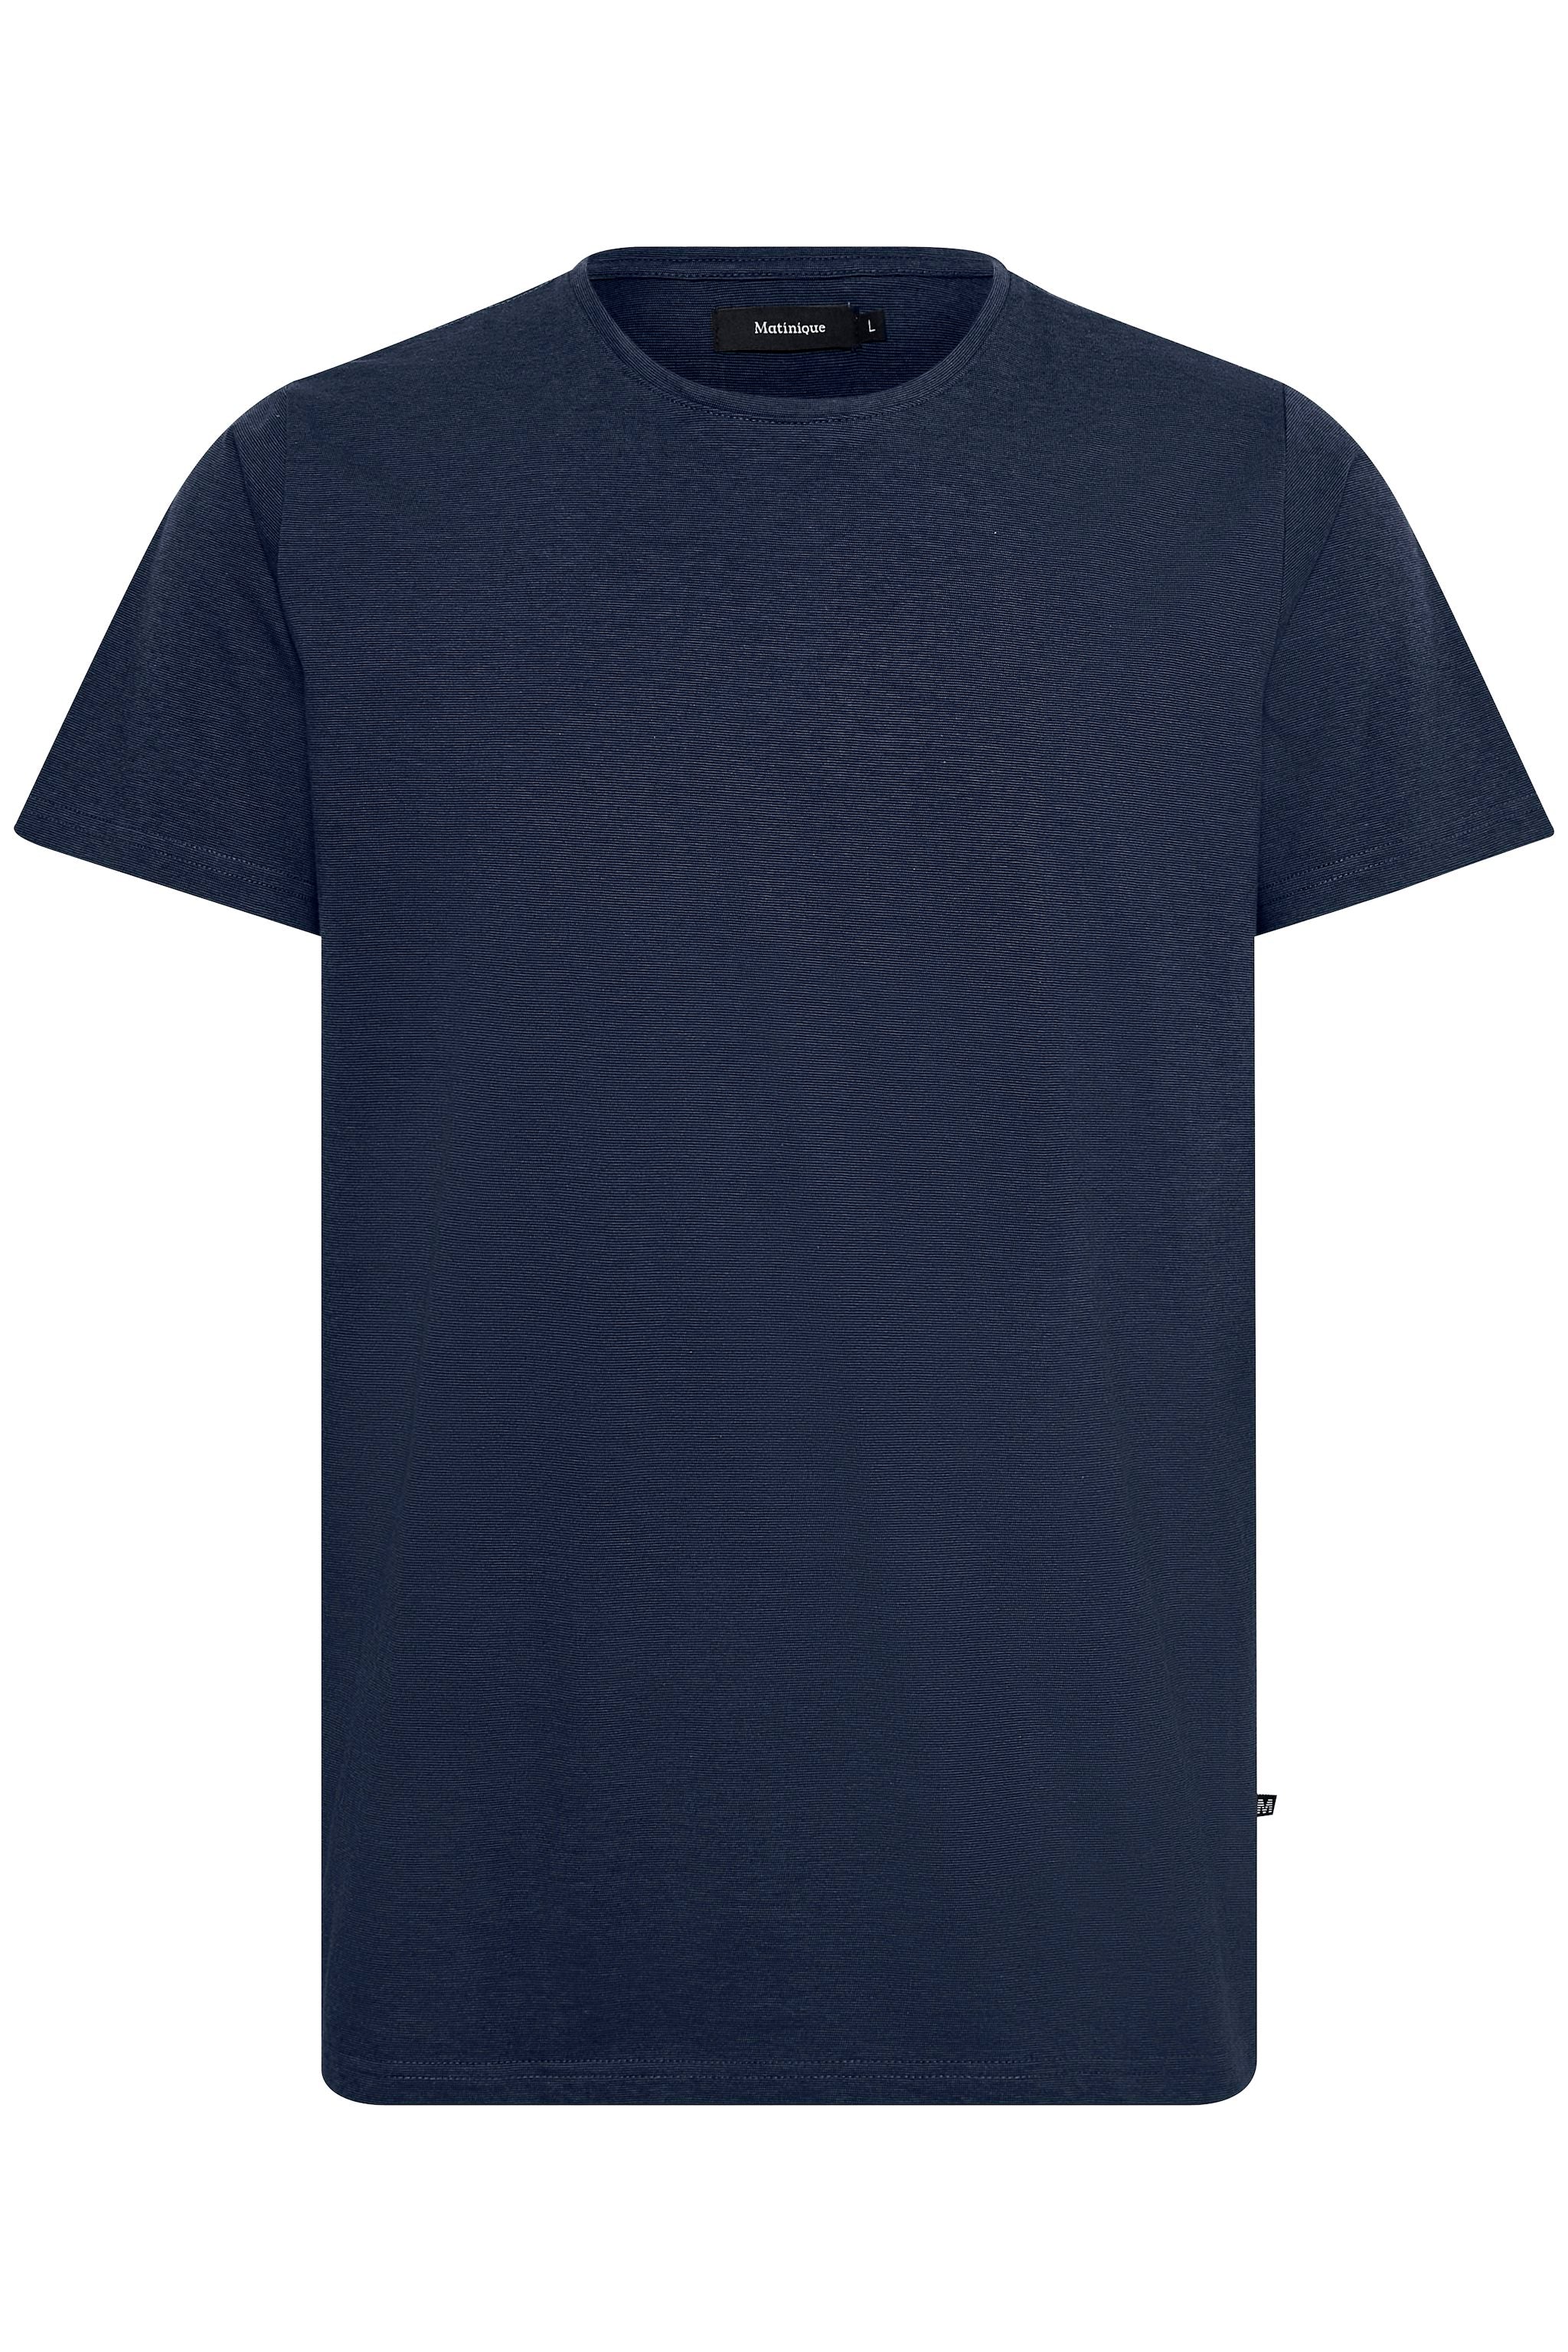 Jermane Mini Stripe T-Shirt in Sharp Blue, T shirts for men, stripe t shirts for men